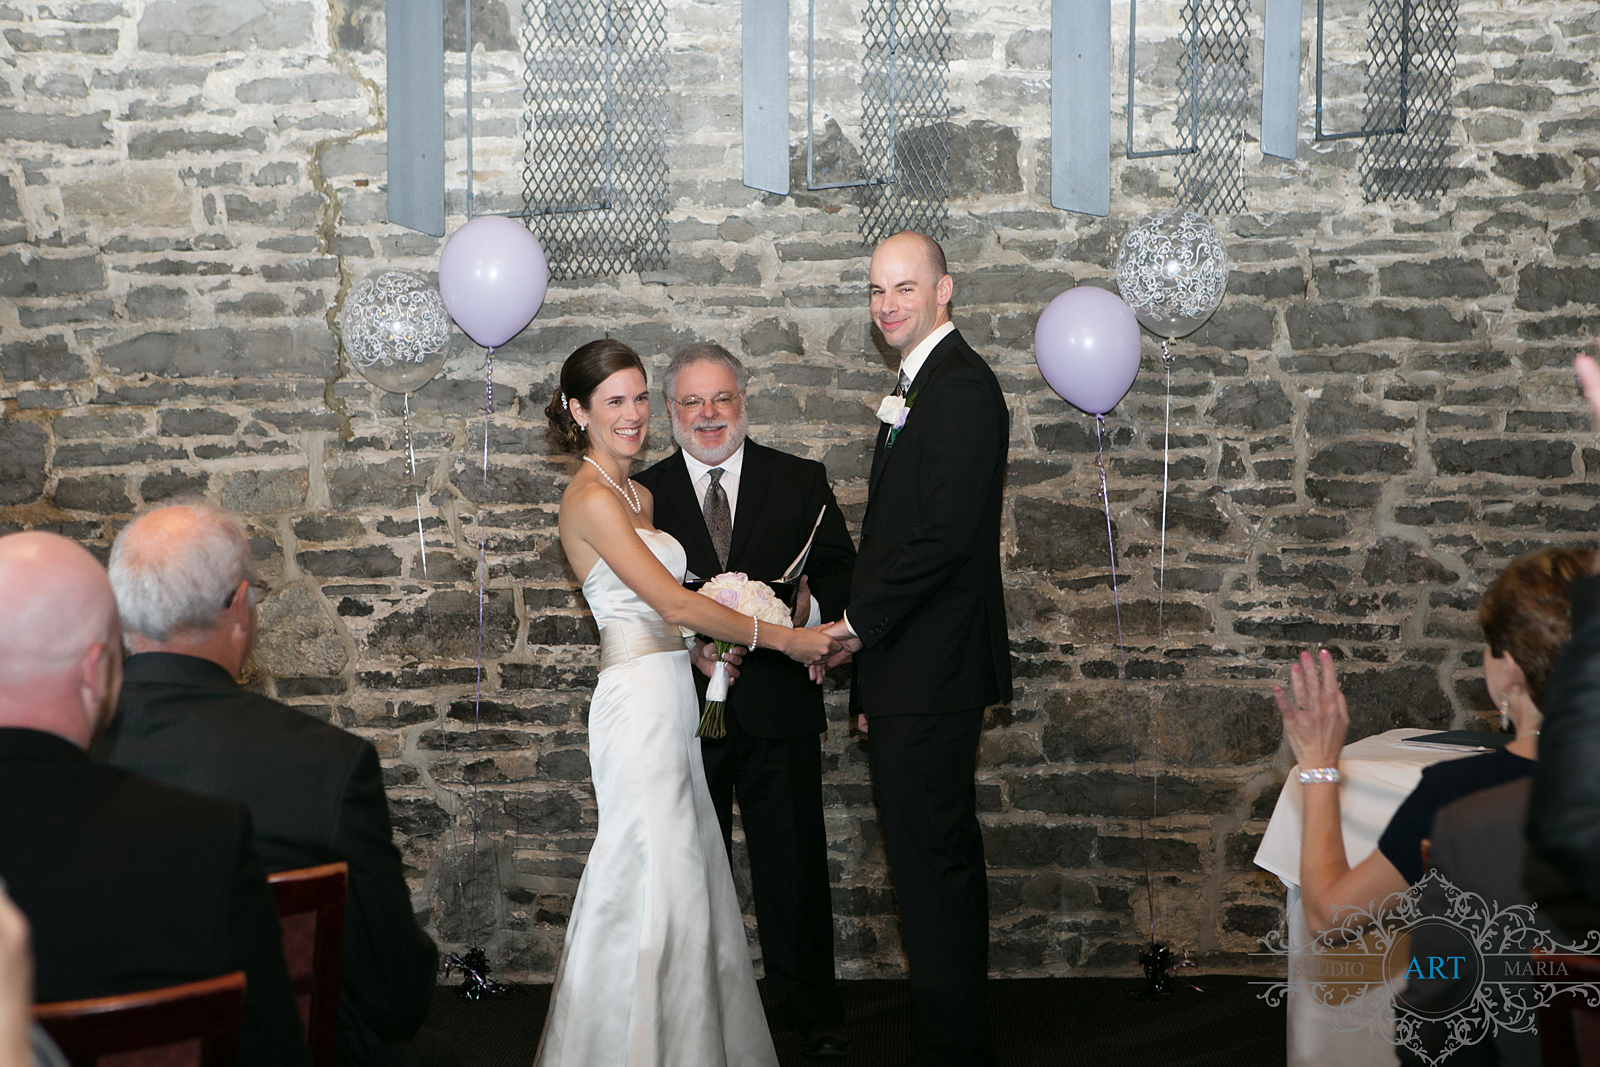 https://www.ottawaweddingmagazine.com/wp-content/uploads/2013/11/wedding-pictures-355.jpg